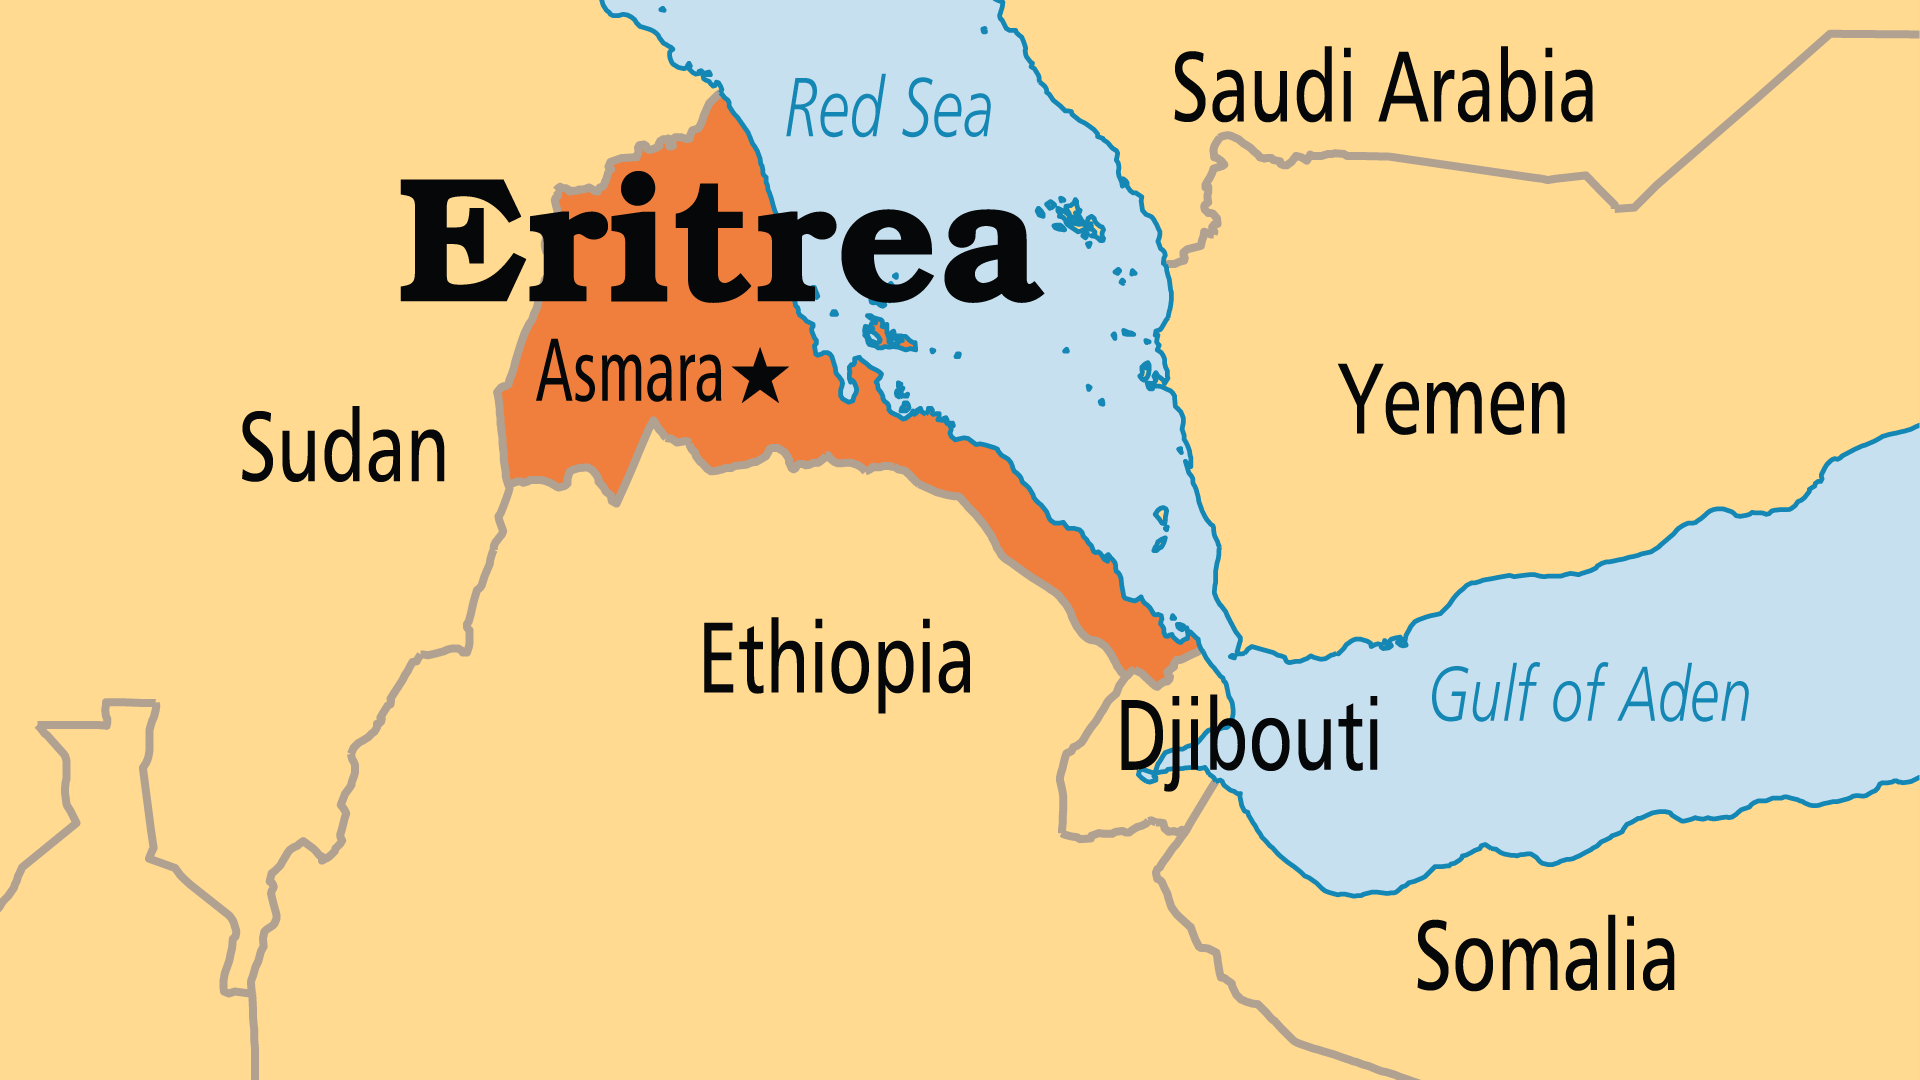 Eritrea: The Story You Don't Hear